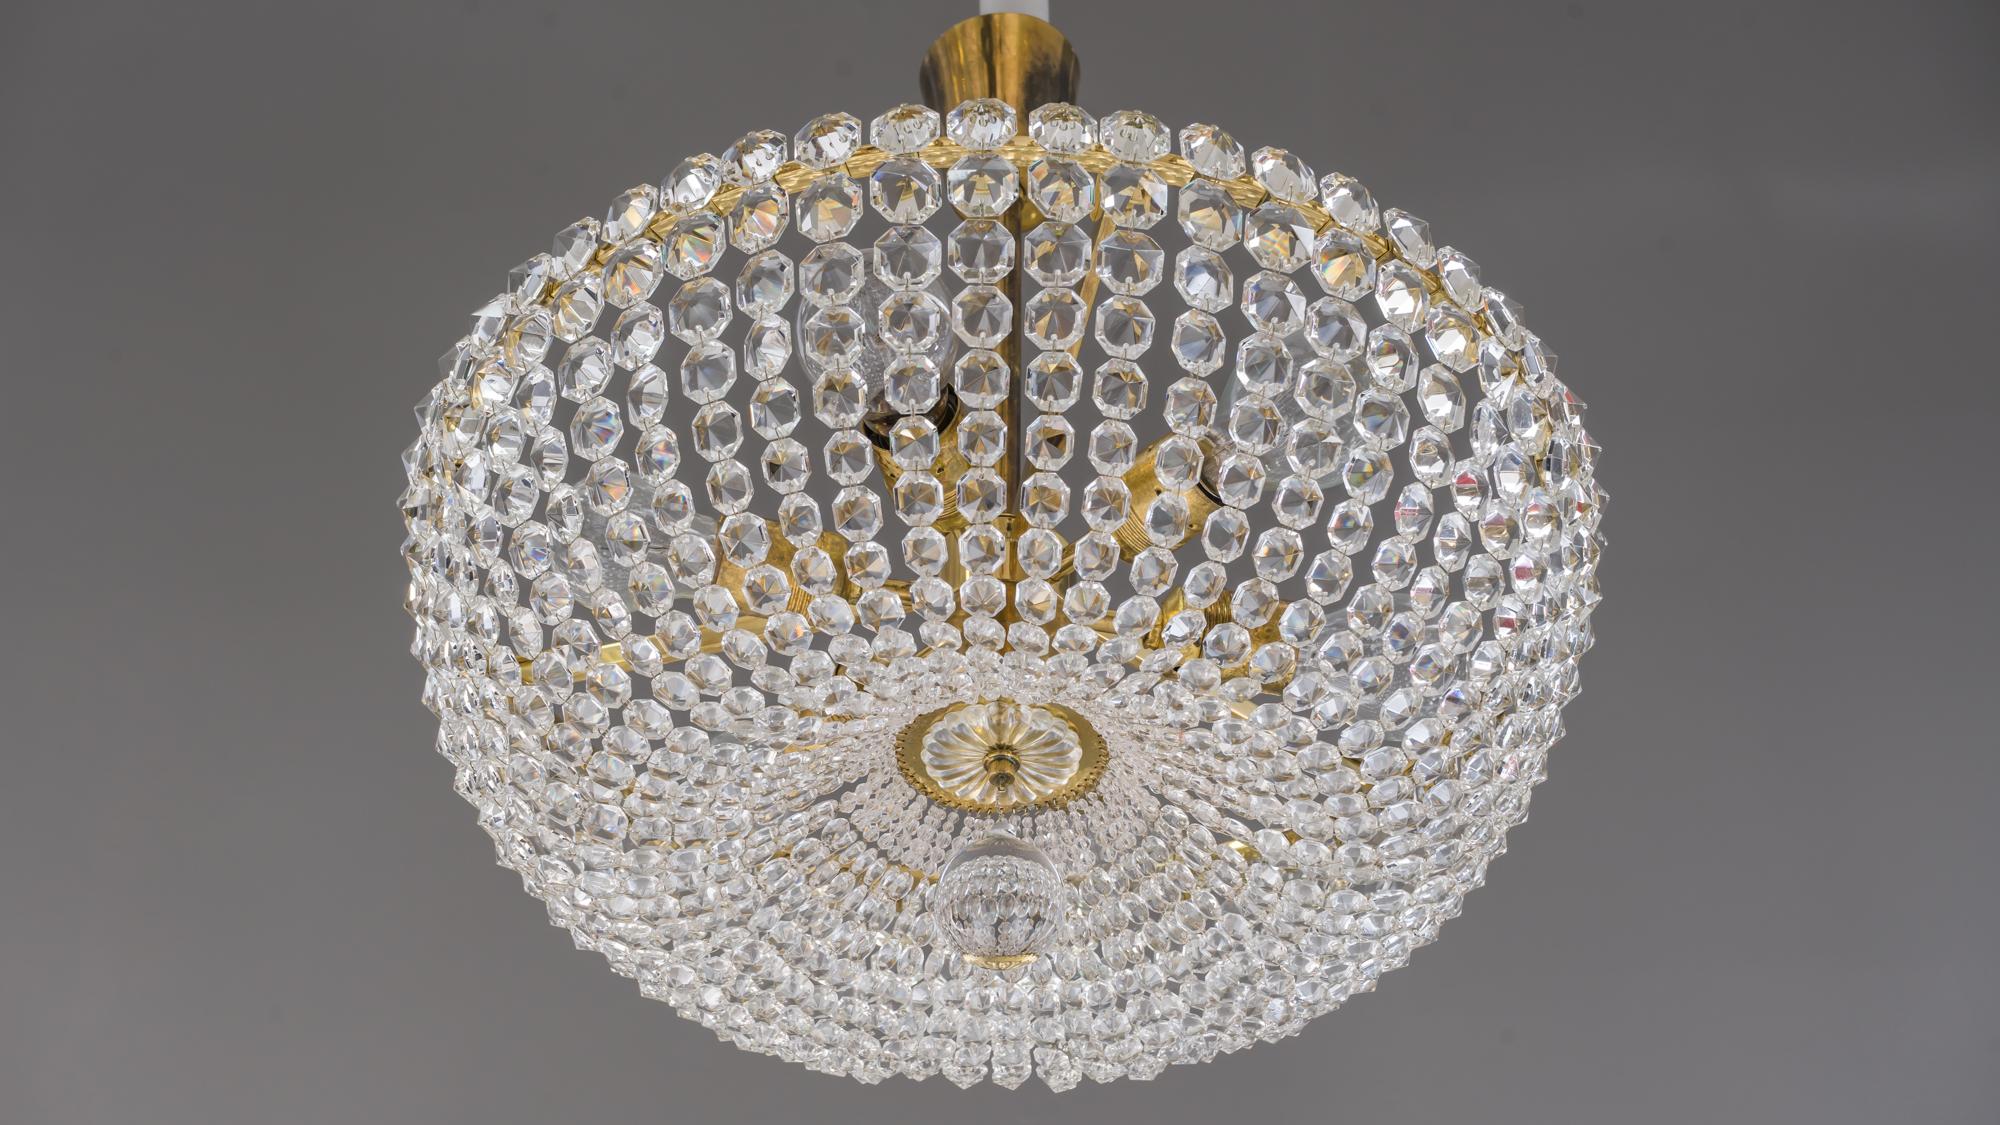 Big Lobmeyr crystal chandelier 1950s (marked)
Original condition.
  